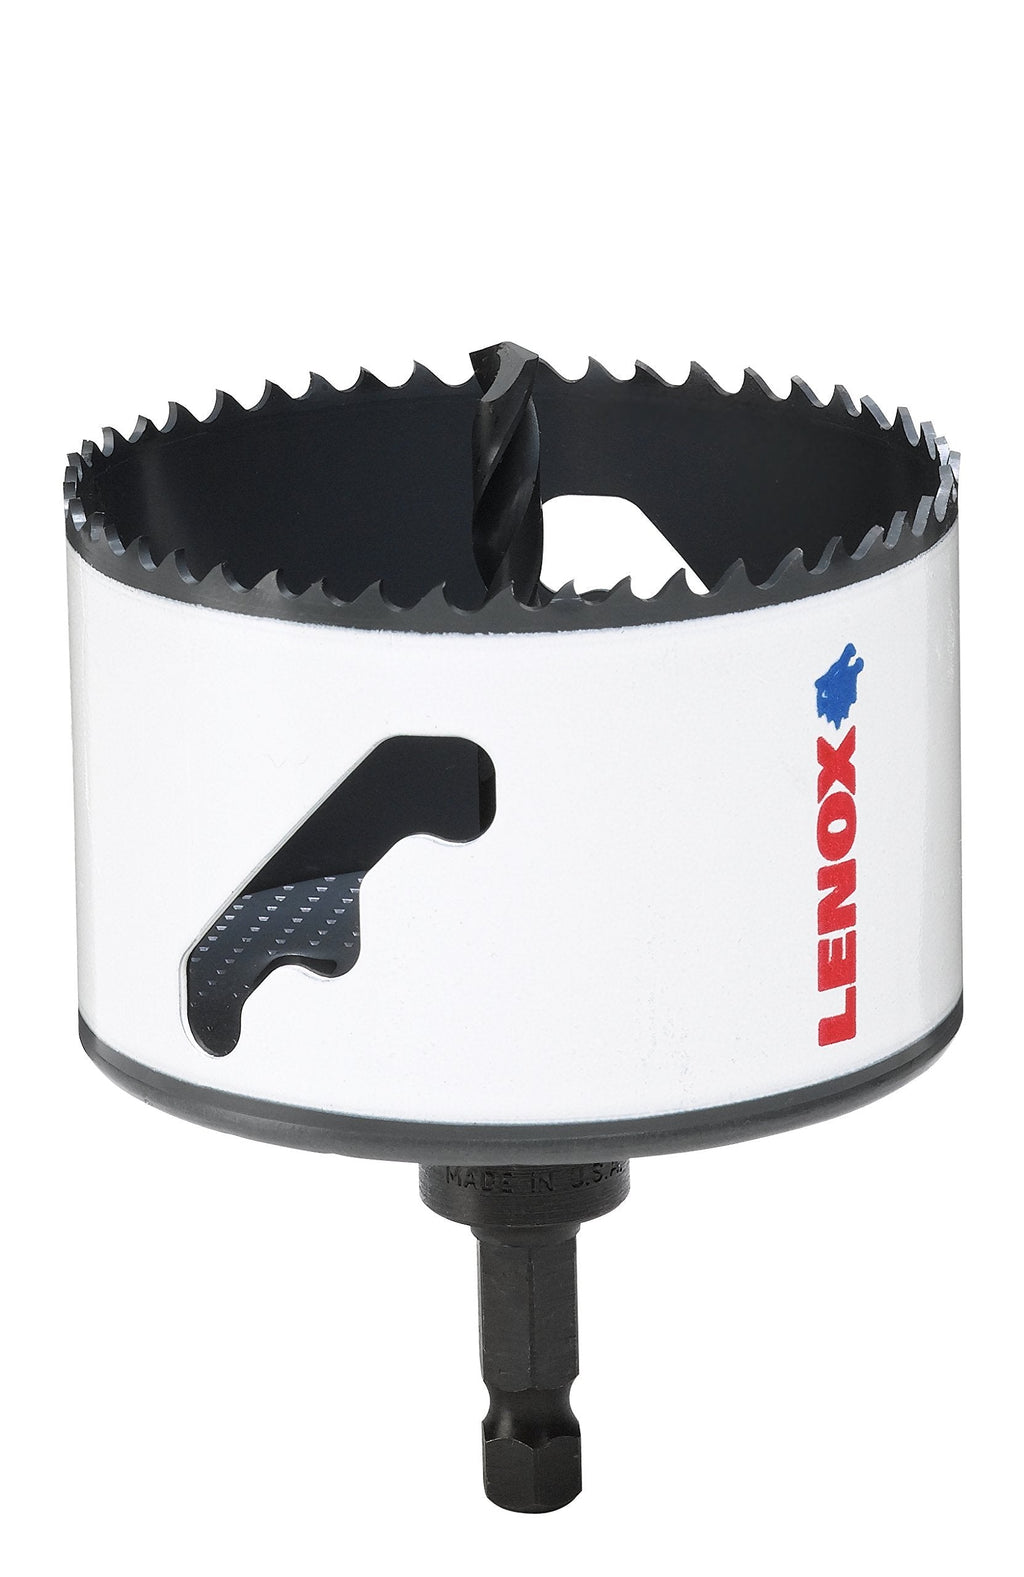 Lenox Tools - 1772964 LENOX Tools Bi-Metal Speed Slot Arbored Hole Saw with T3 Technology, 3-1/8" 1 - NewNest Australia